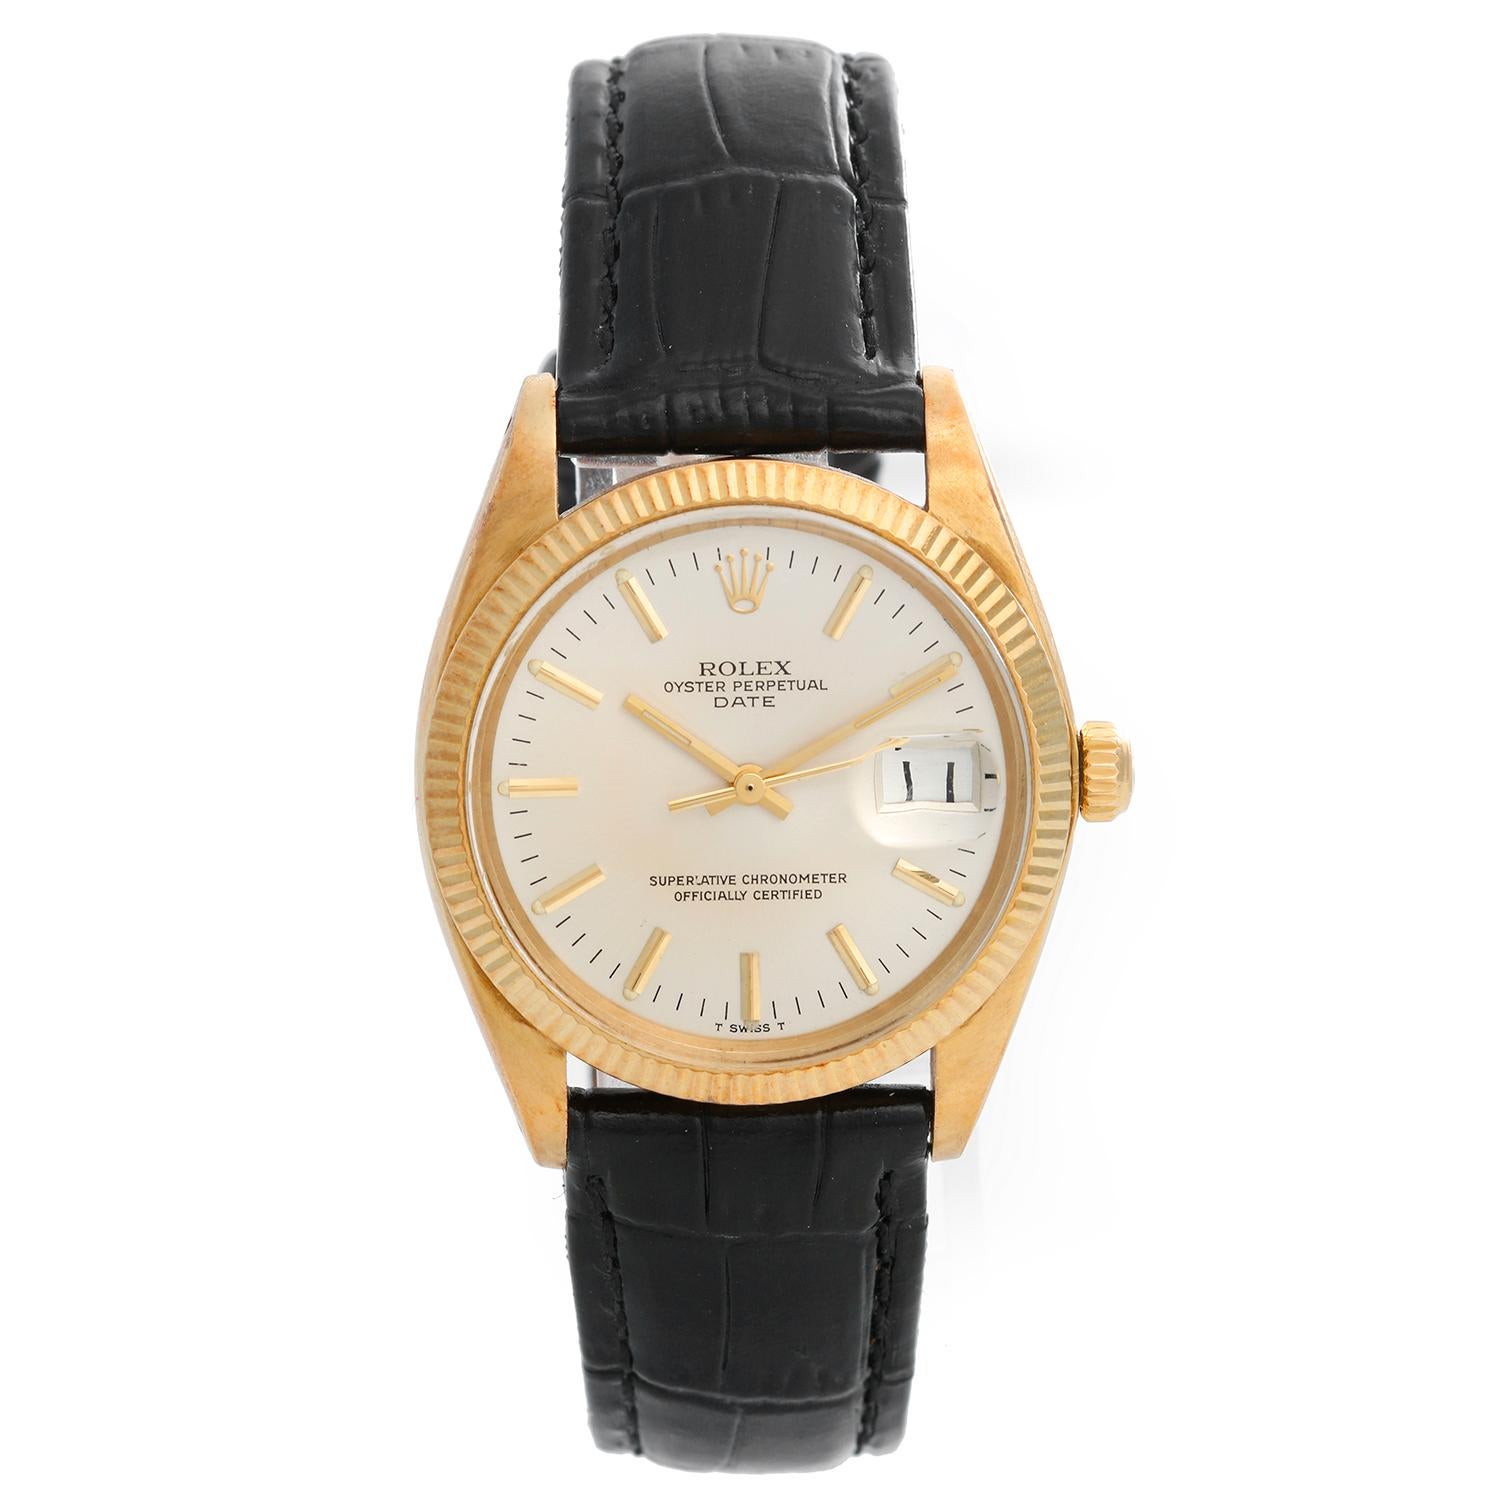 Rolex Date Men's 14 Karat Yellow Gold Watch 1503